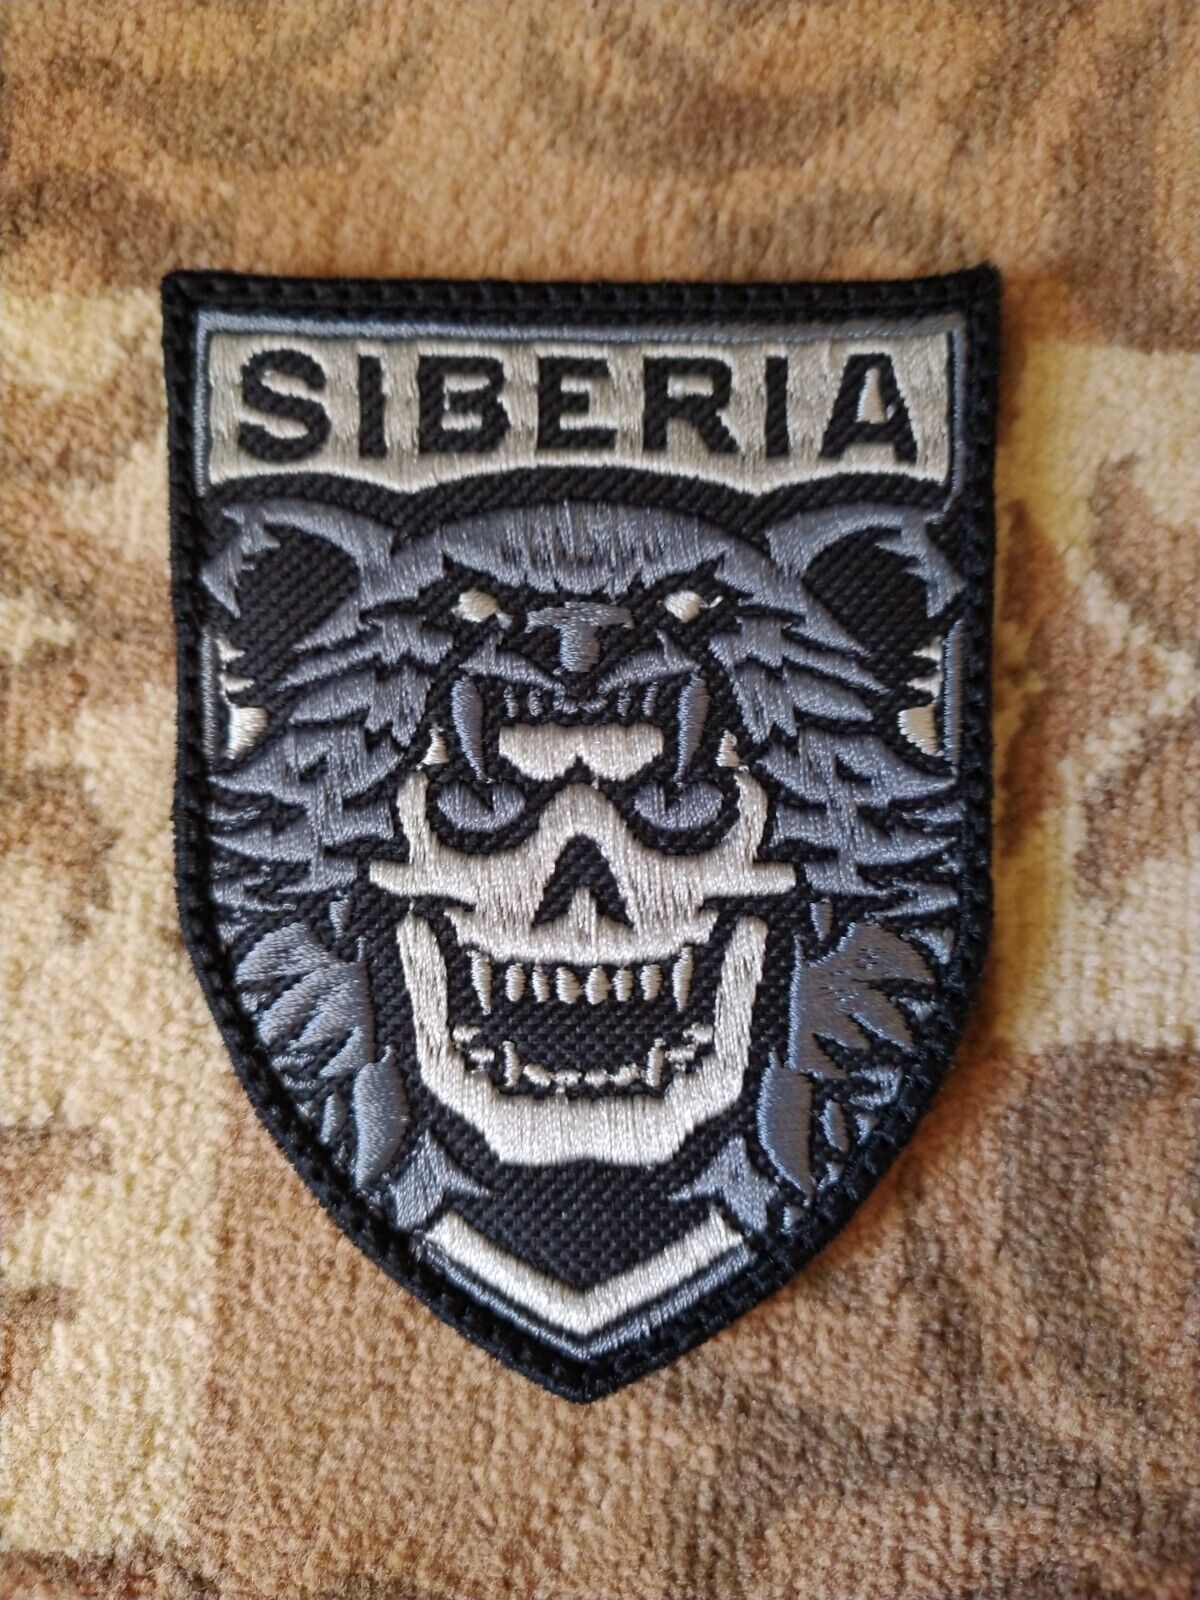 Siberia Battalion RDK Russian Volunteer  Corps Ukrainian Army PATCH  UKRAINE